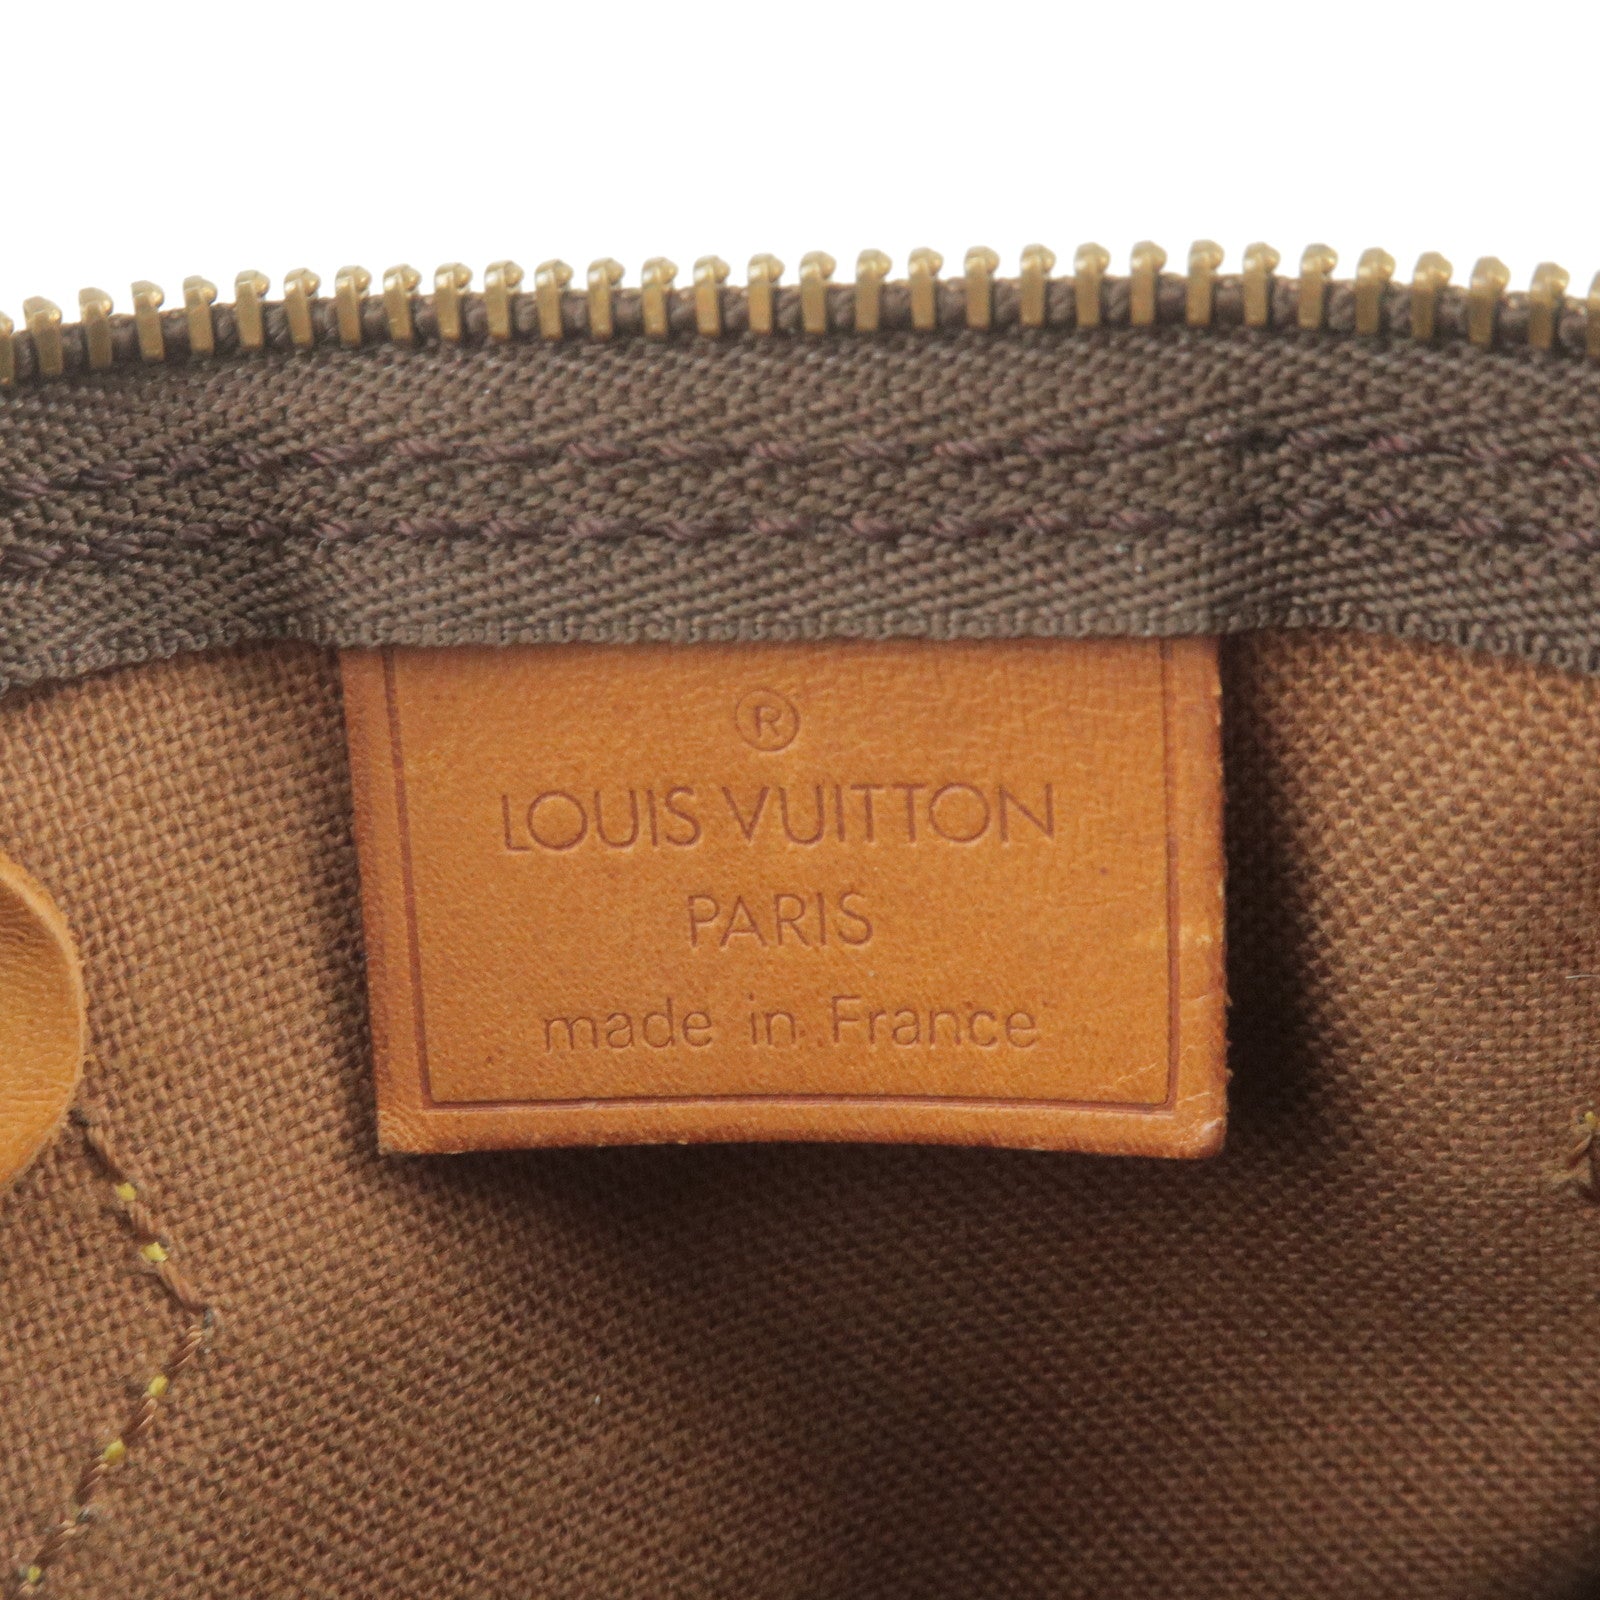 Auth Louis Vuitton Monogram Mini Speedy & Strap M41534 J00145 Used